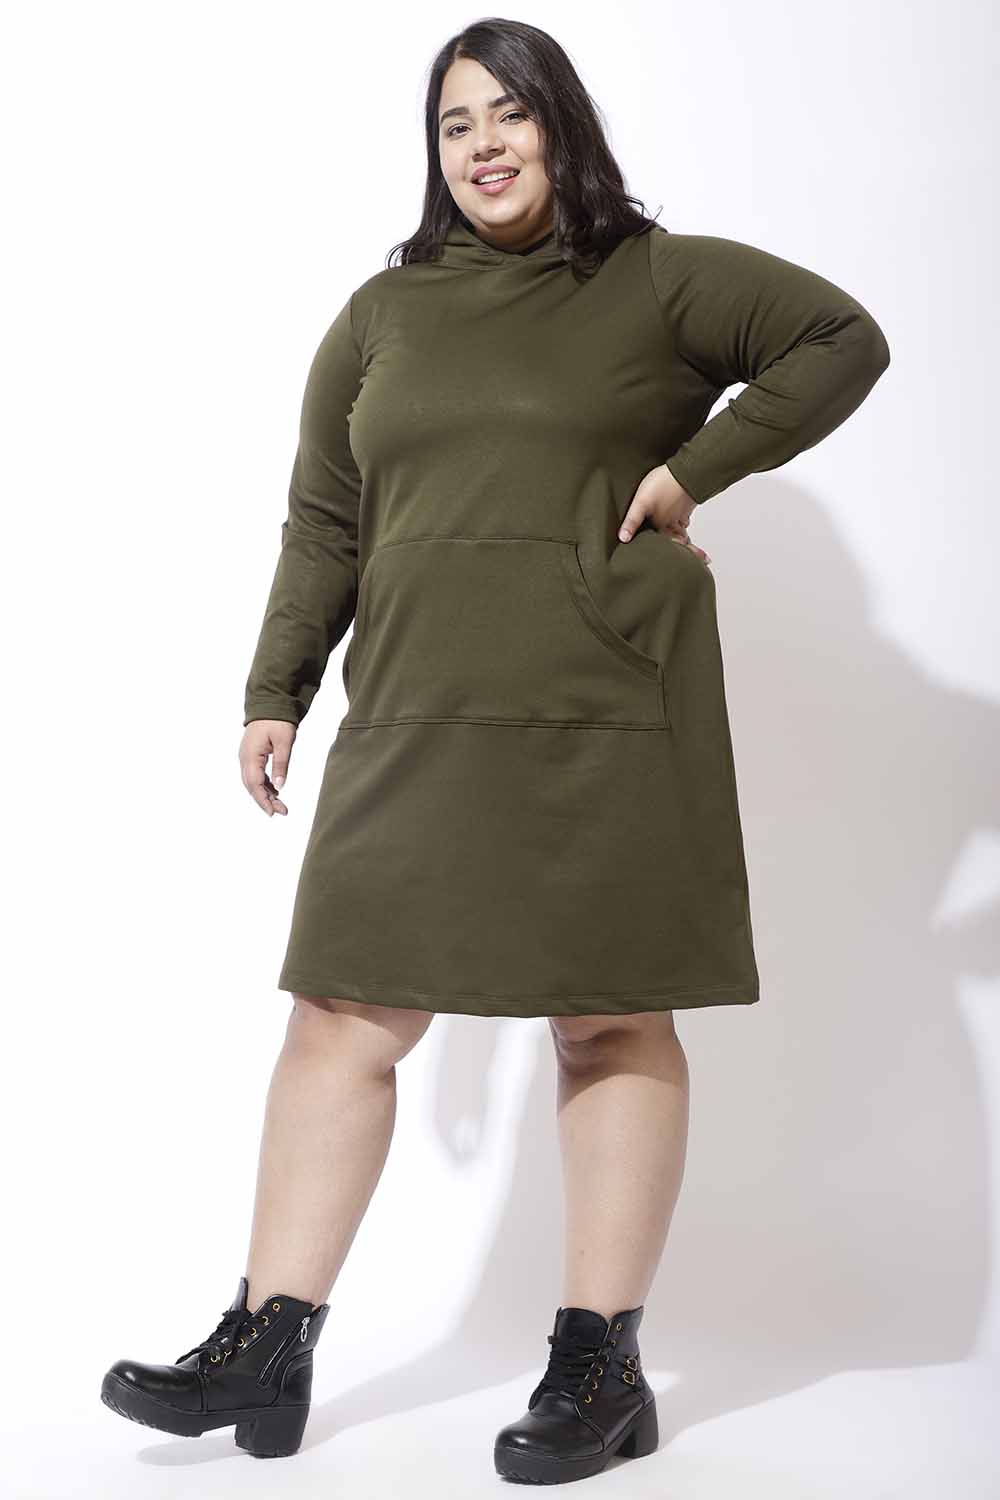 Plus Size Plus Size Olive Sweatshirt Hoodie Winter Dress